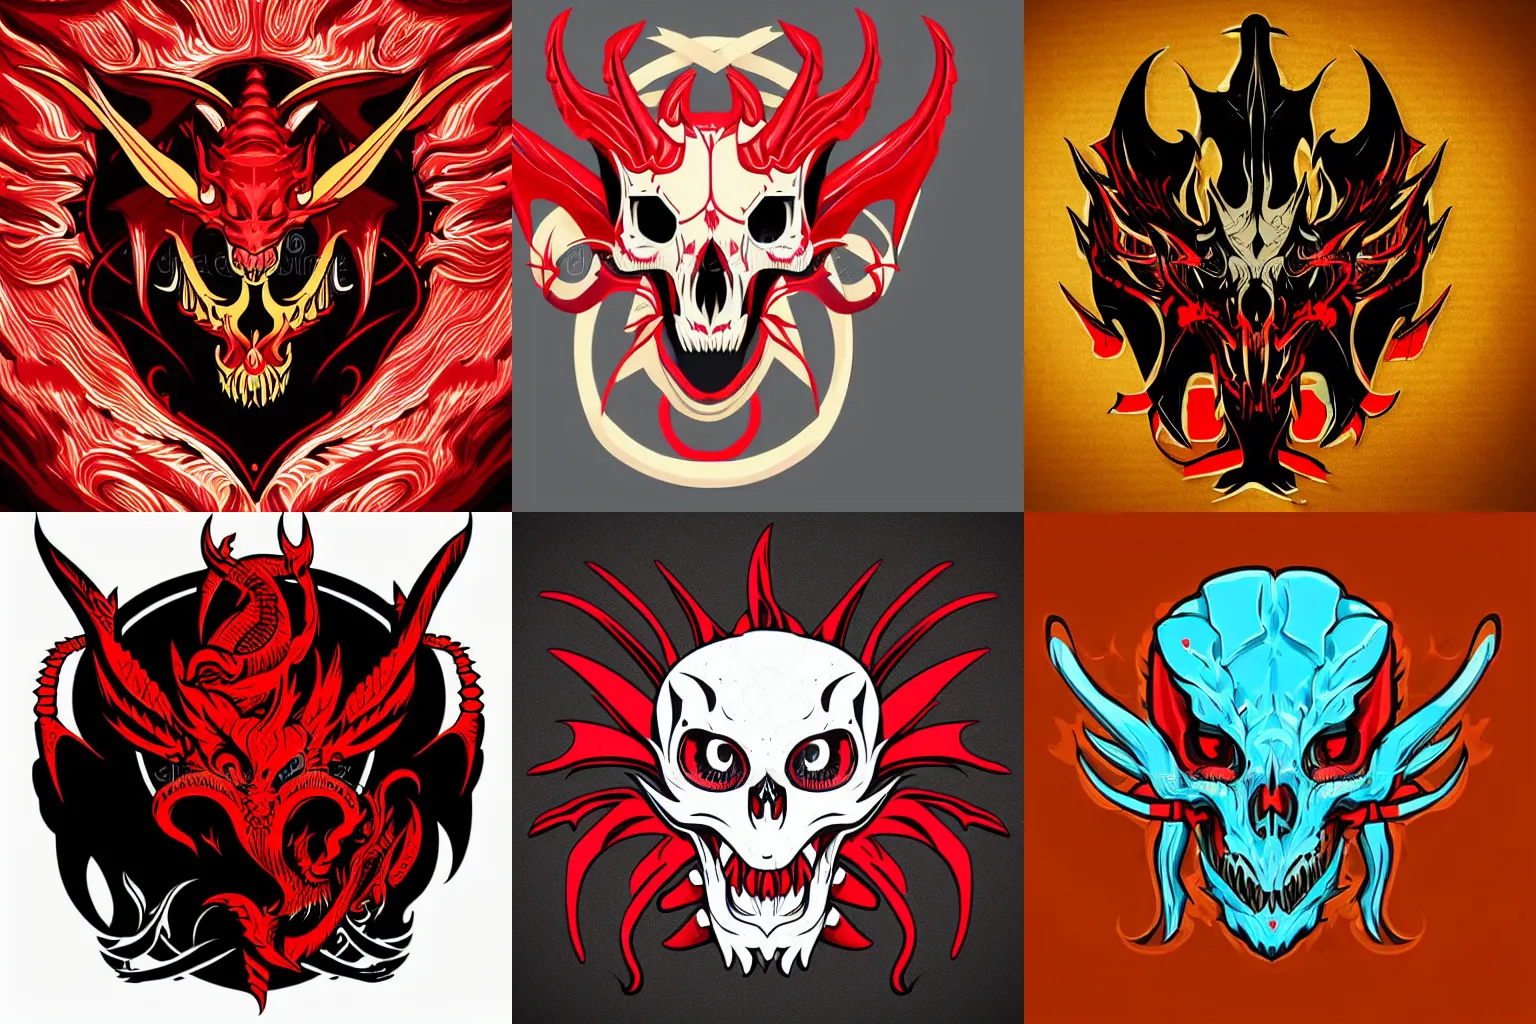 Prompt: red dragon skull portrait modern digital sharp detailed cybersport twitch streamer logo beautiful vector illustration digital art premium quality